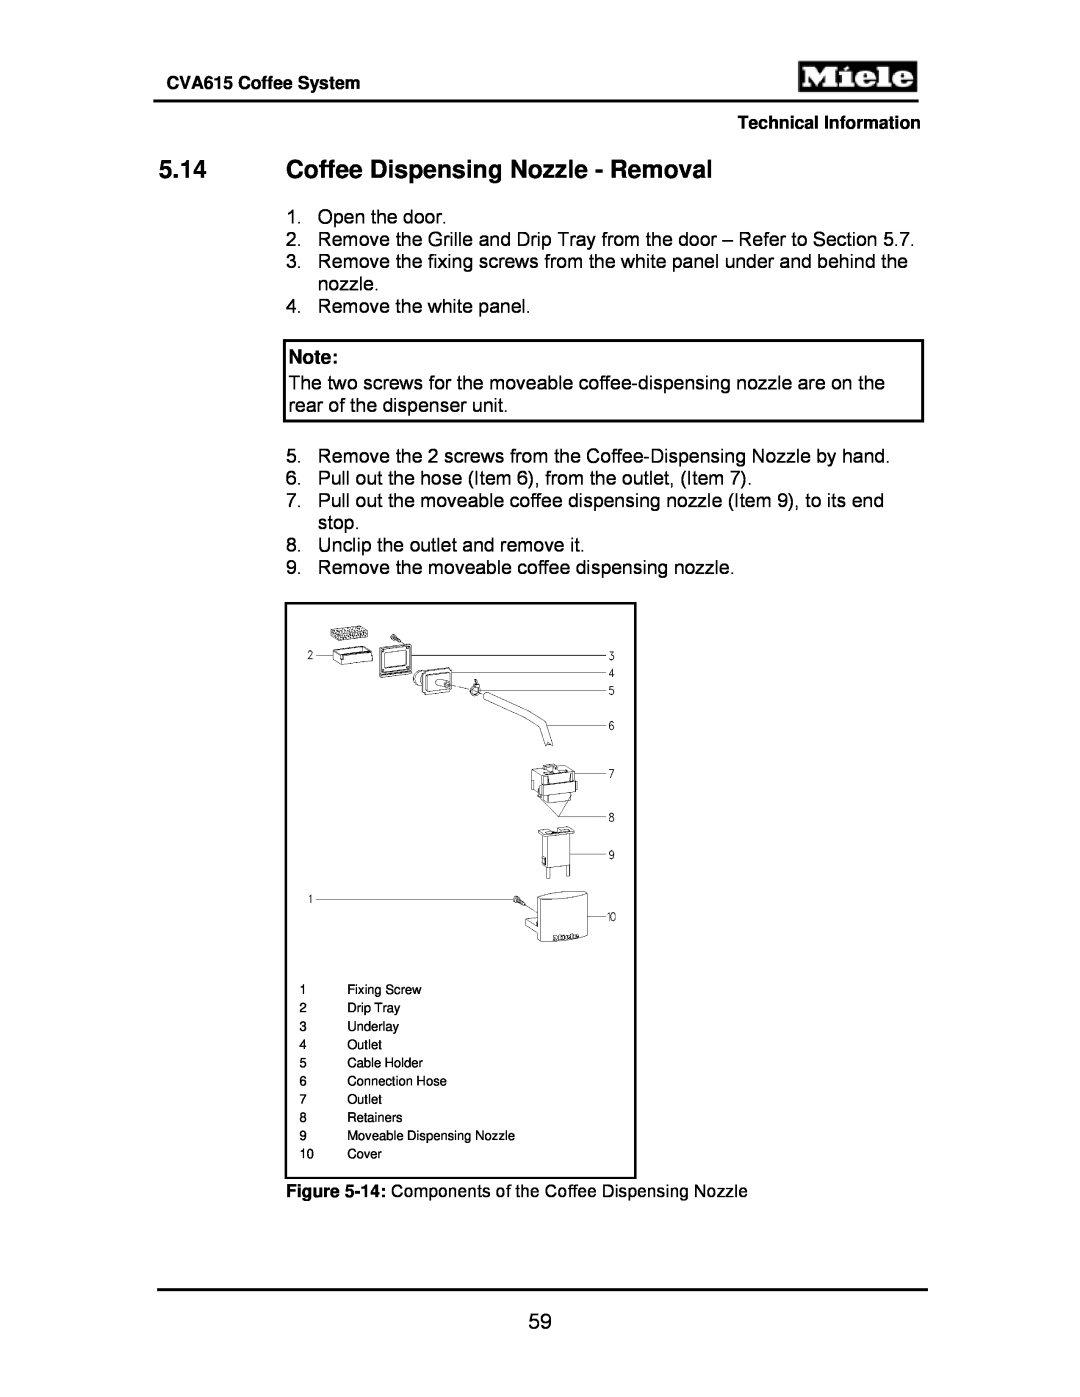 Miele CVA615 manual 5.14Coffee Dispensing Nozzle - Removal 